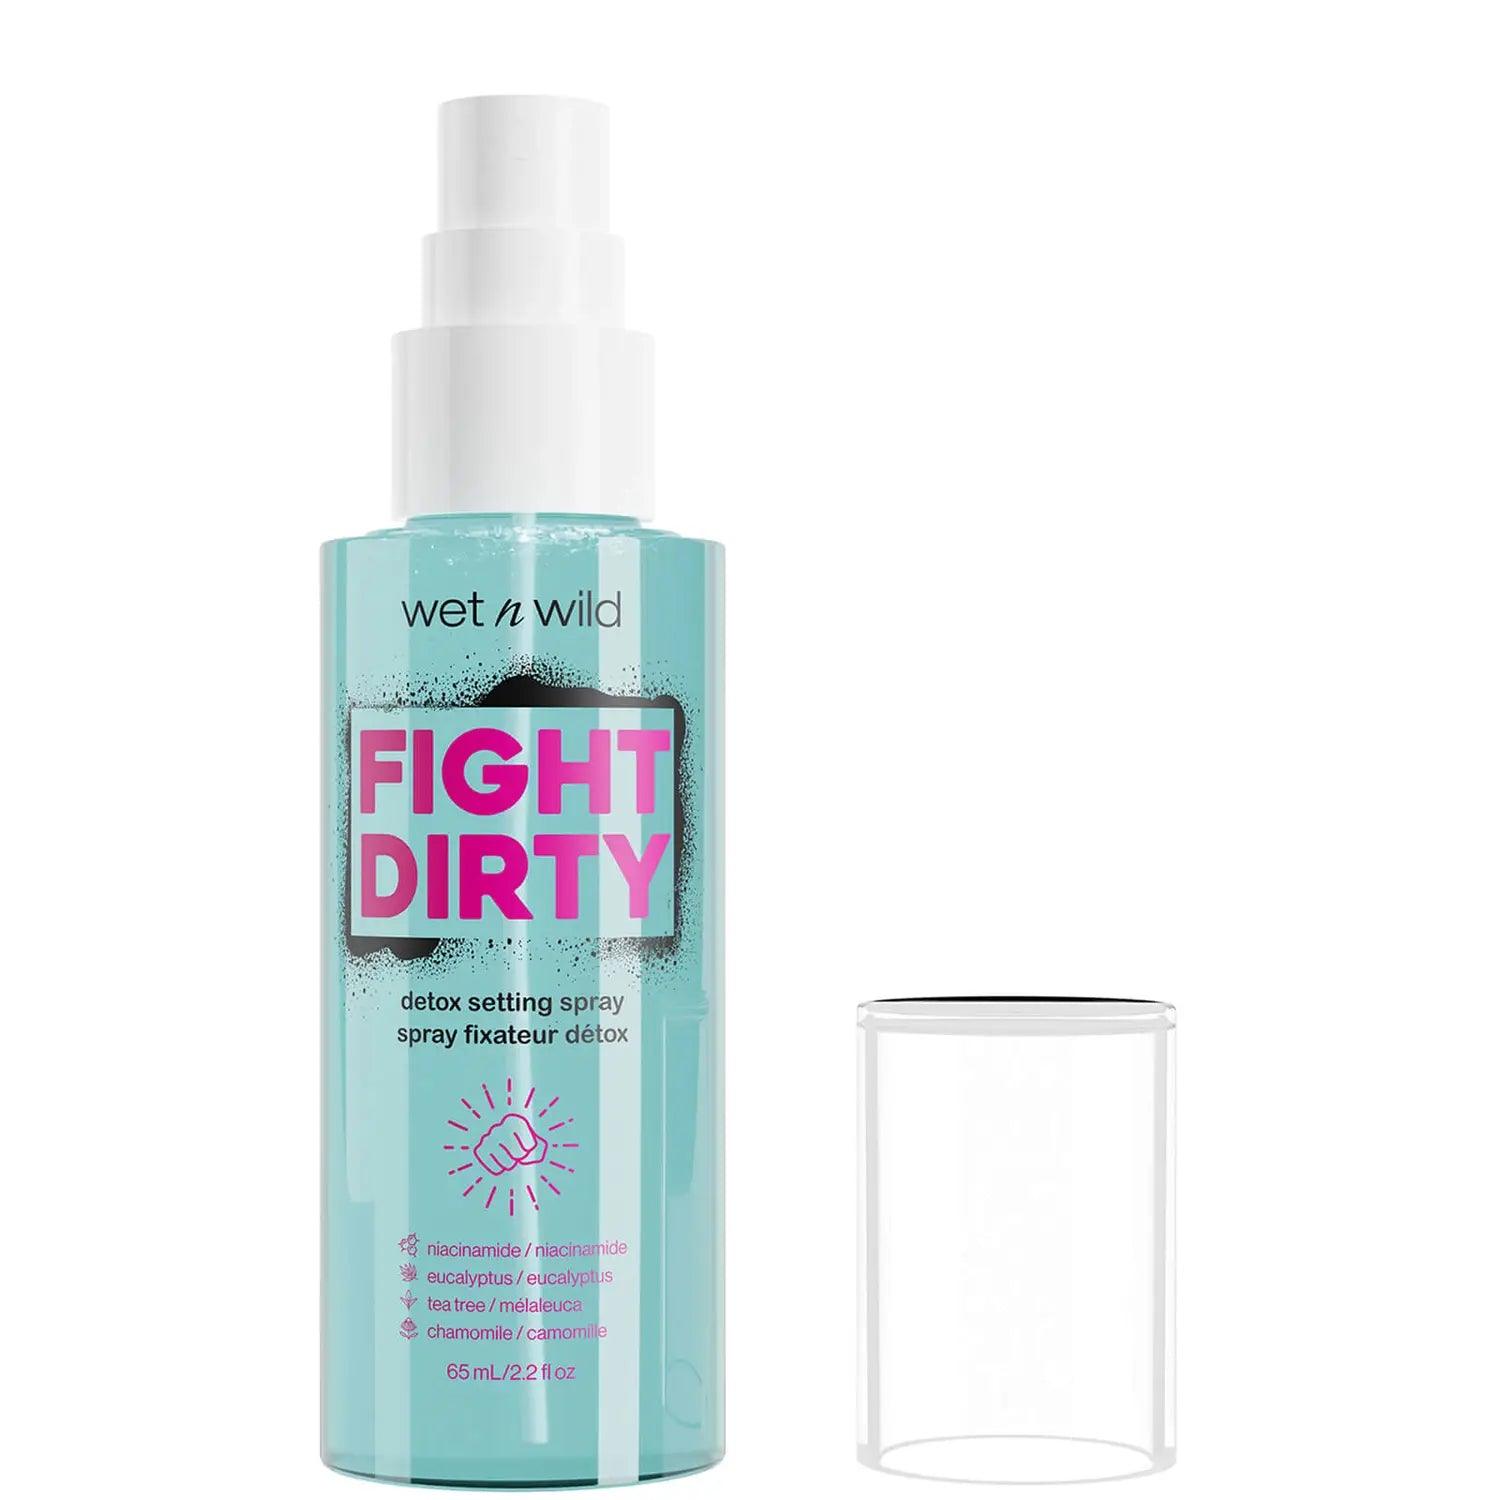 Wet n wild Fight Dirty Clarifying Setting Spray 65ml - Wellness Shoppee